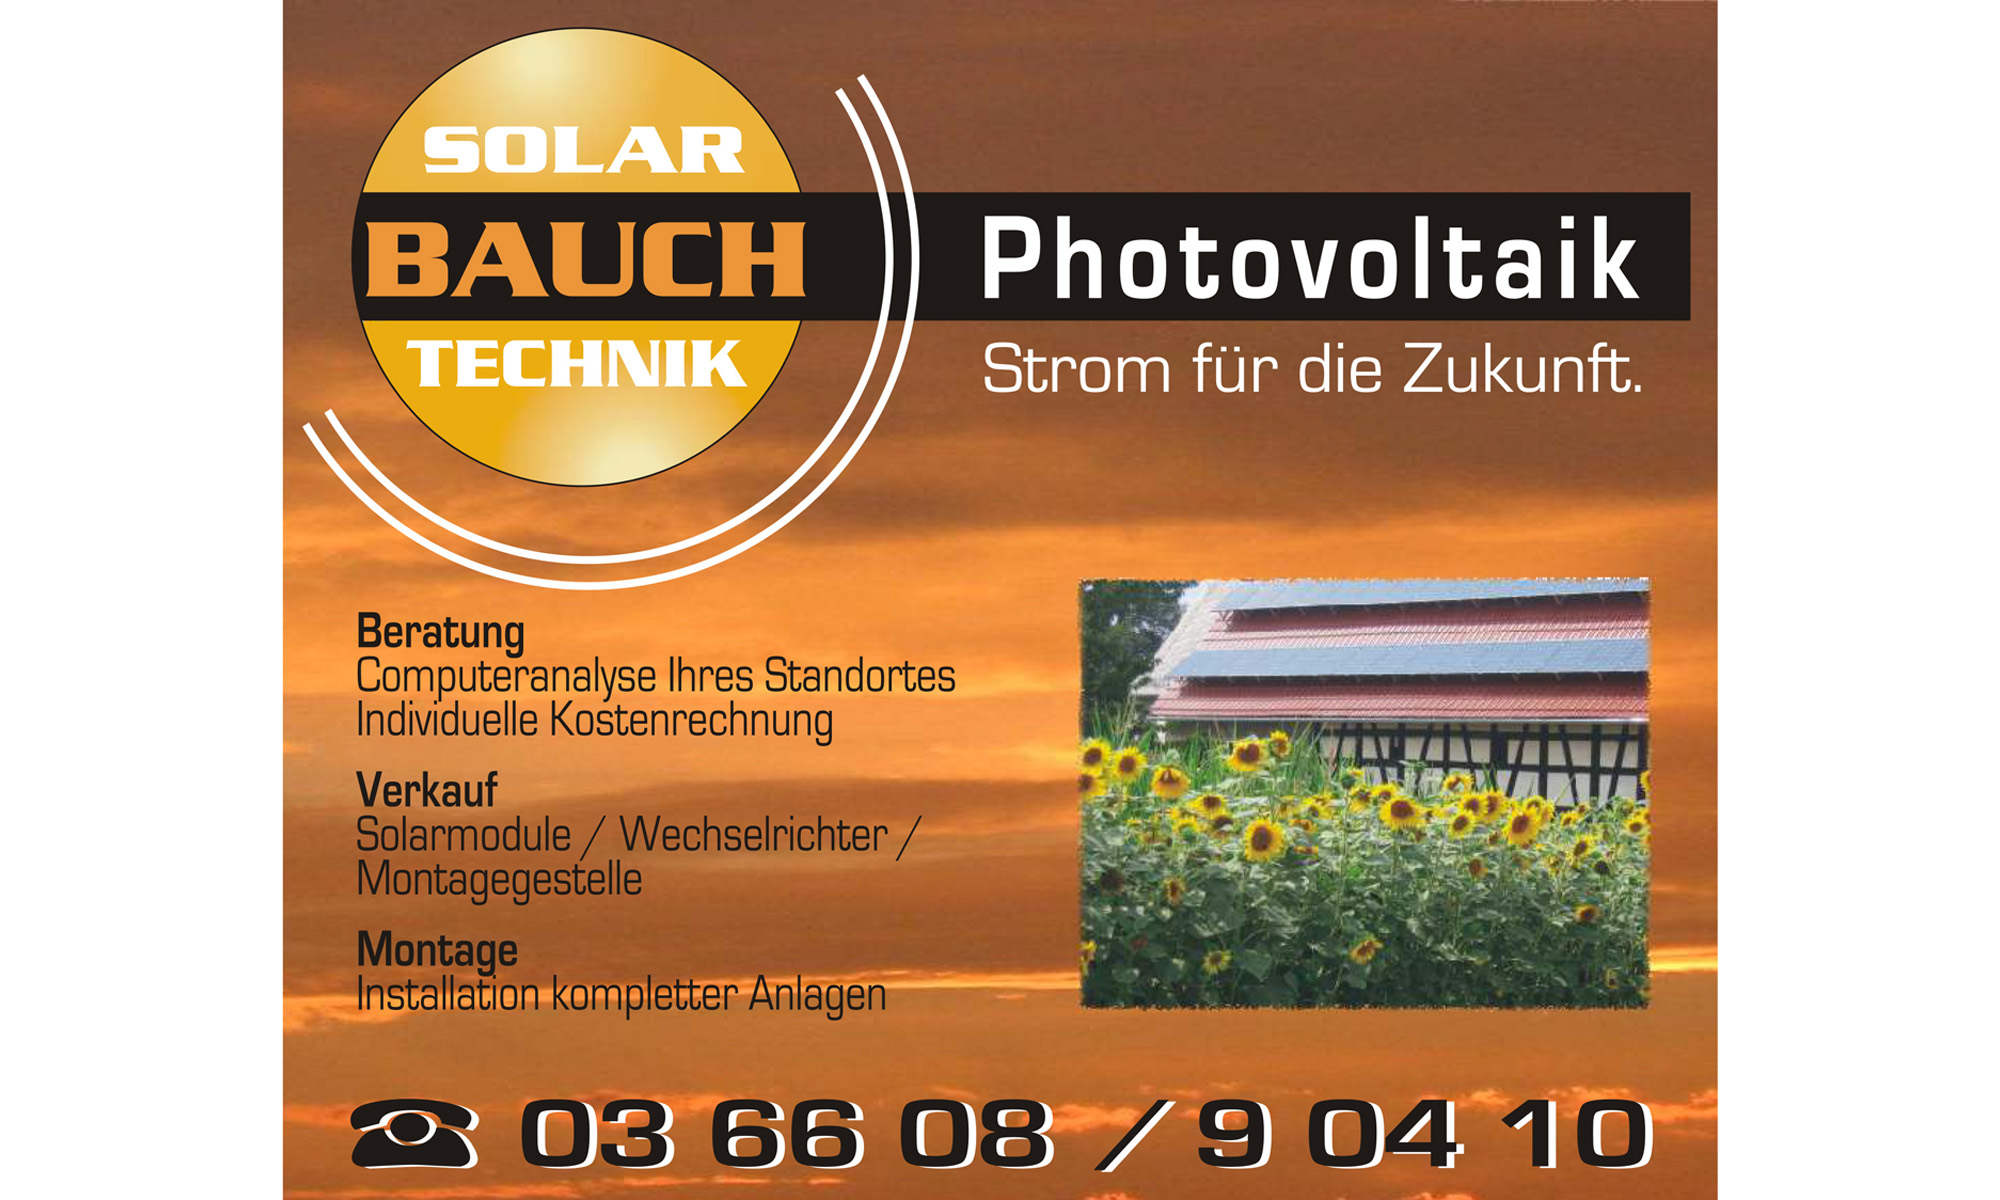 Solartechnik - Thomas Bauch